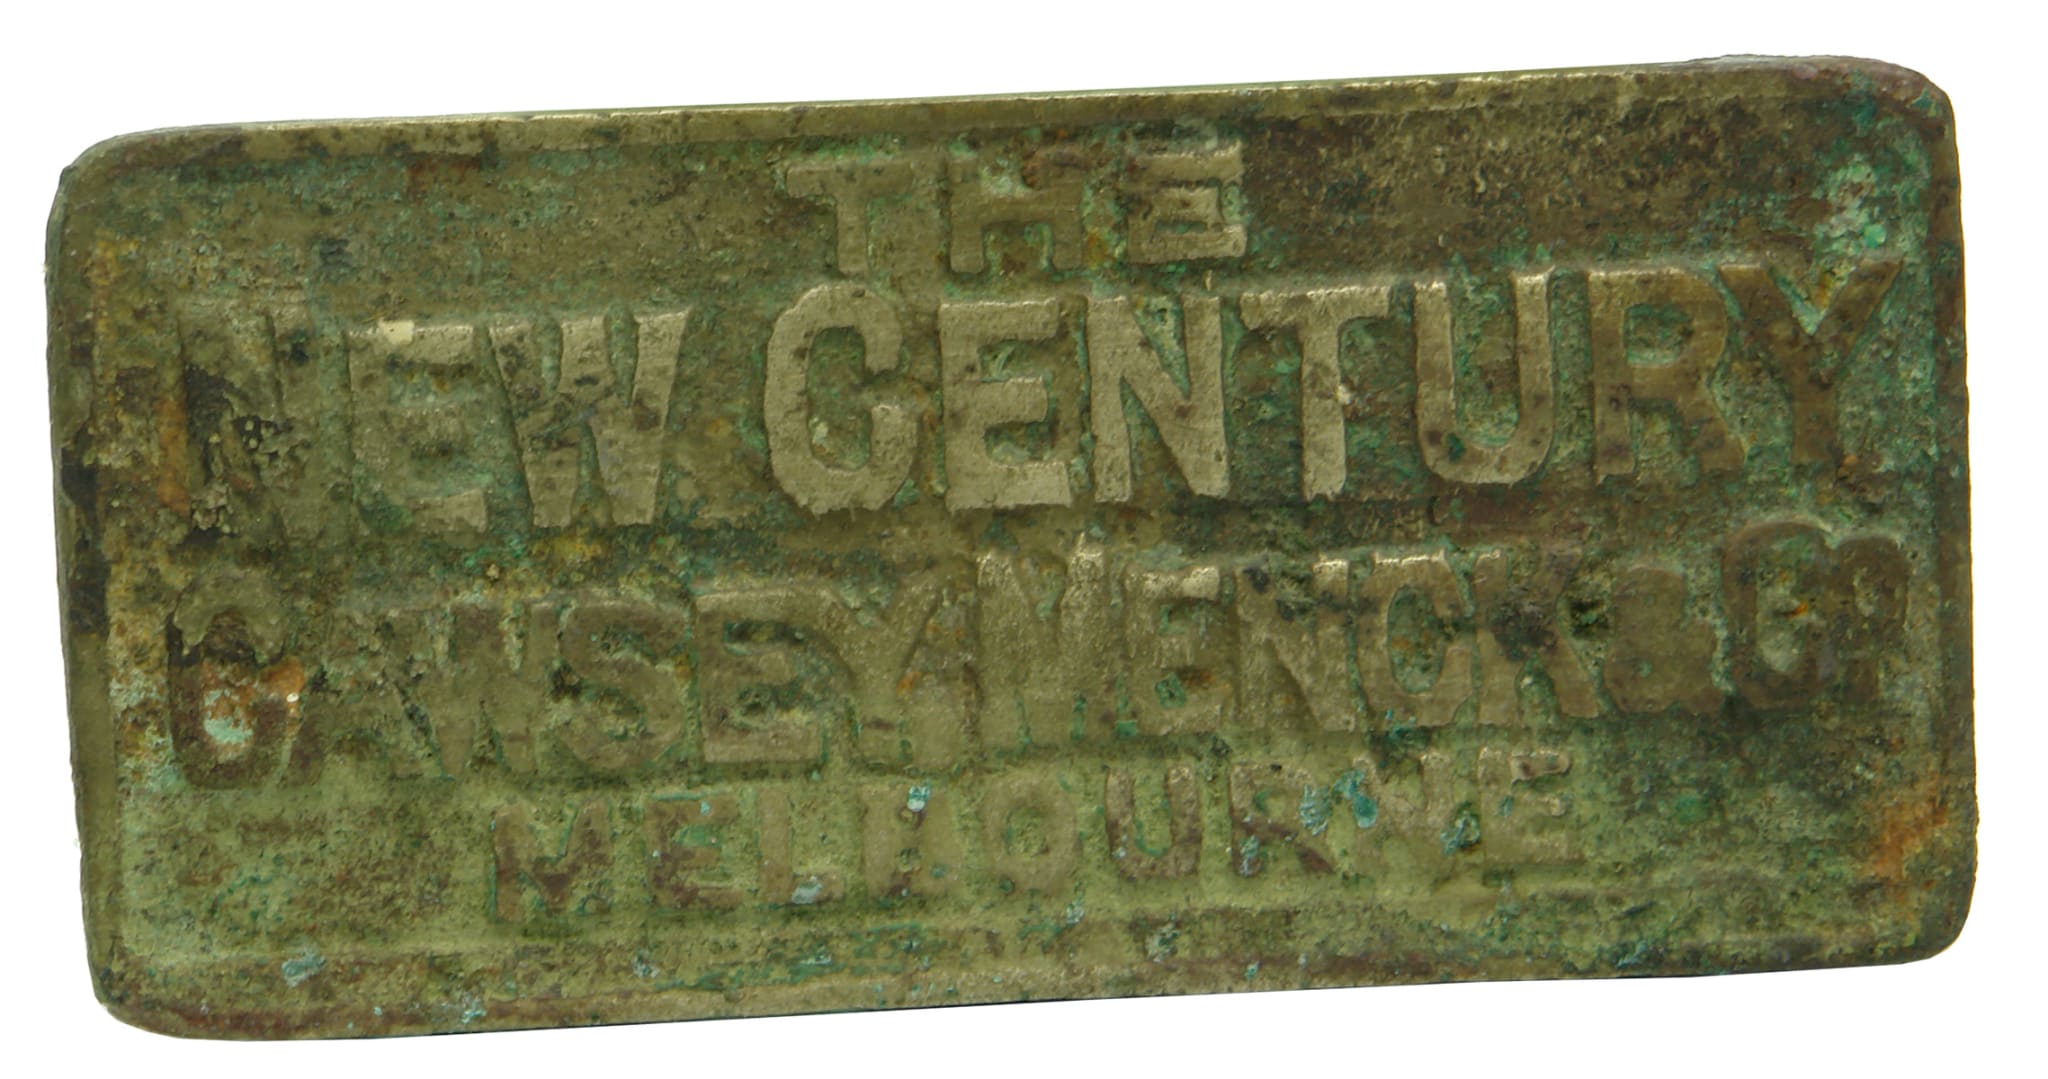 New Century Cawsey Menck Name Plate